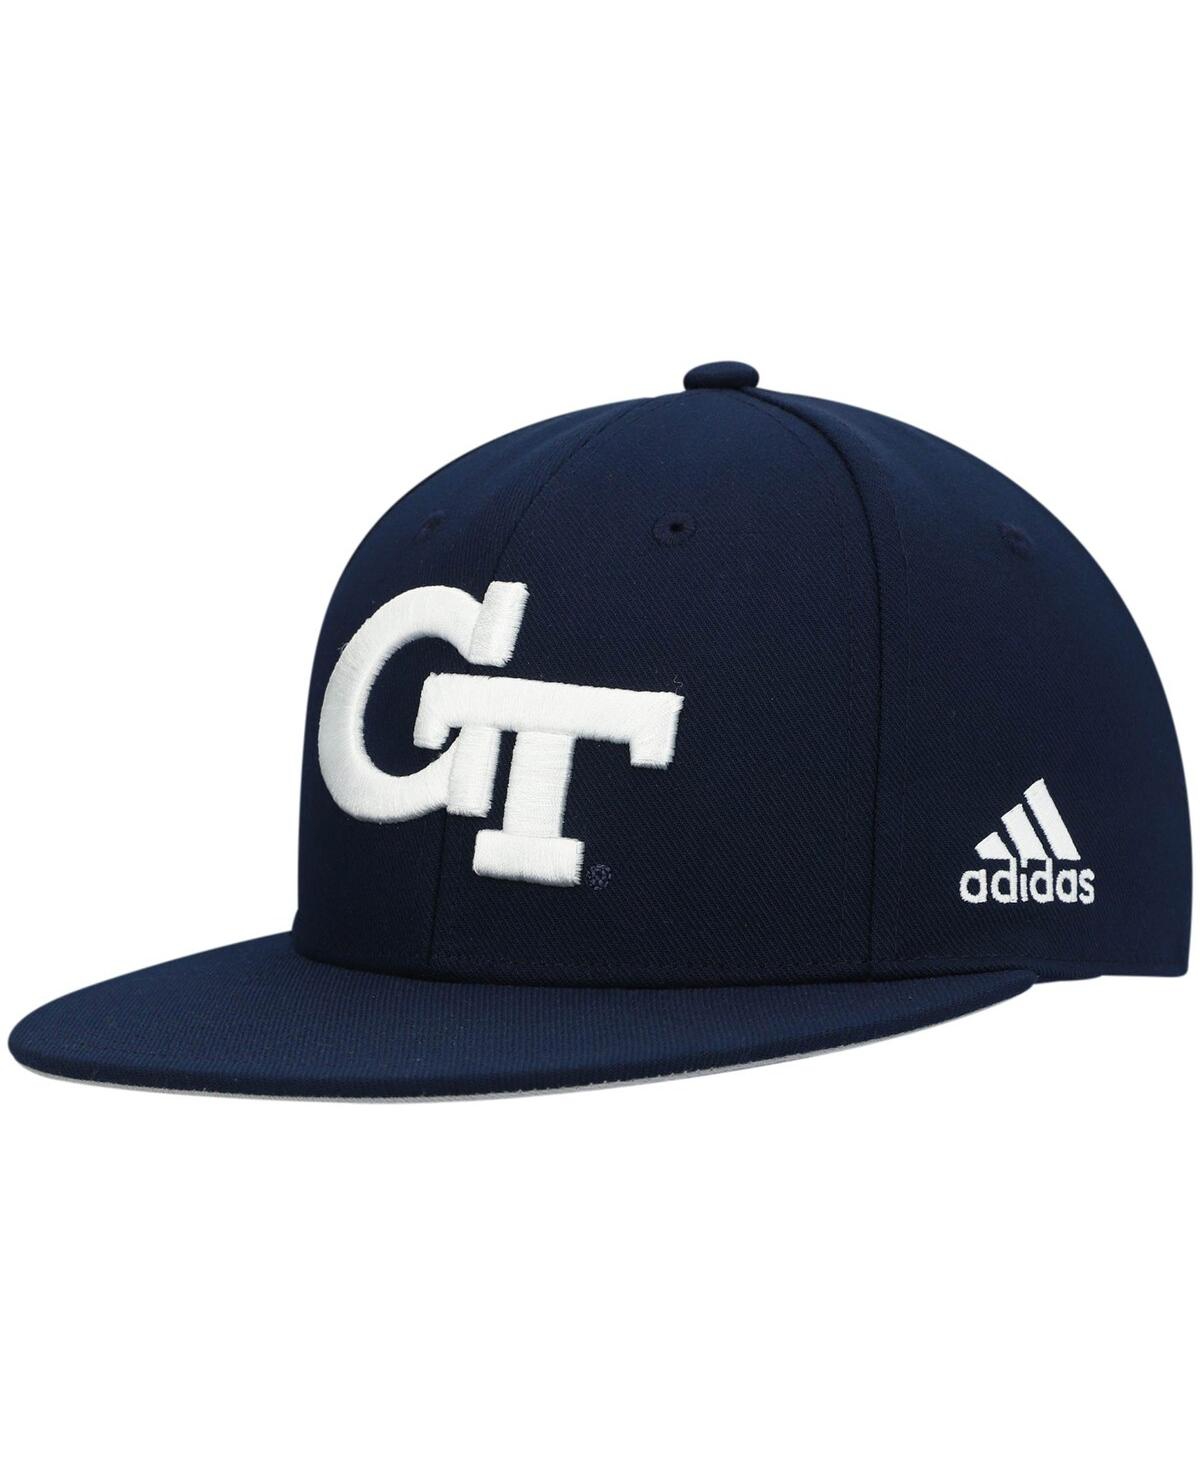 Shop Adidas Originals Men's Adidas Navy Georgia Tech Yellow Jackets Logo On-field Baseball Fitted Hat